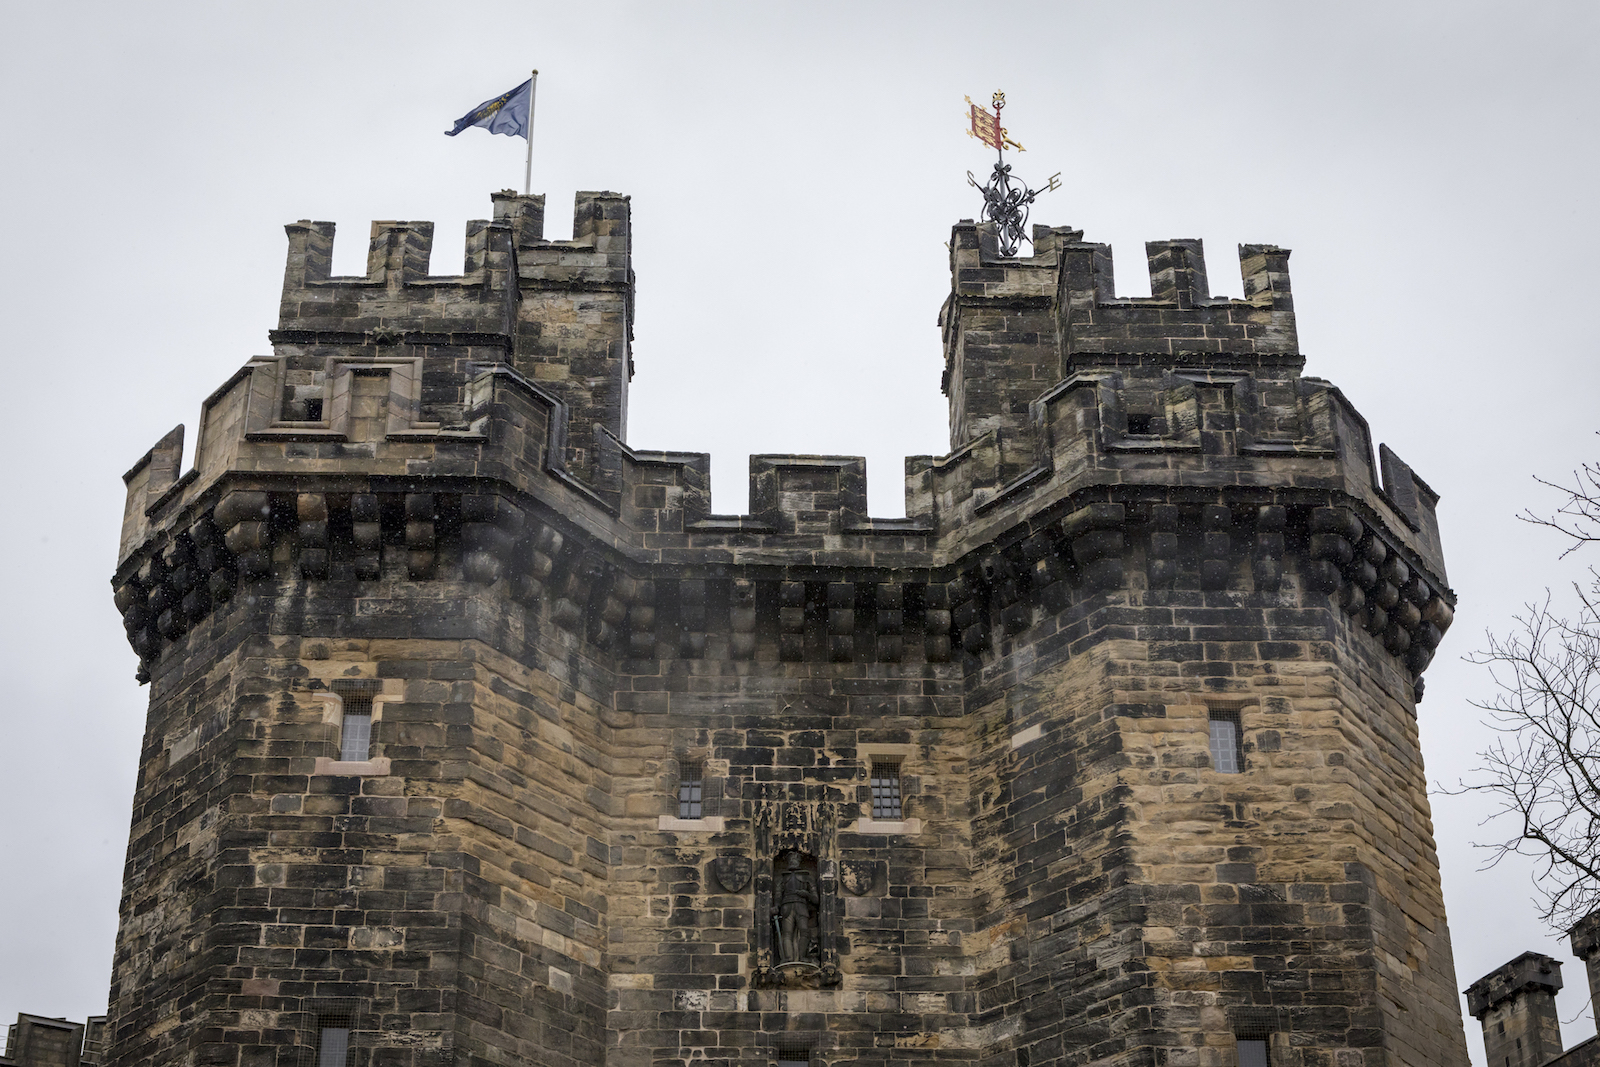 Commonwealth Flag Flies Over Lancaster Castle